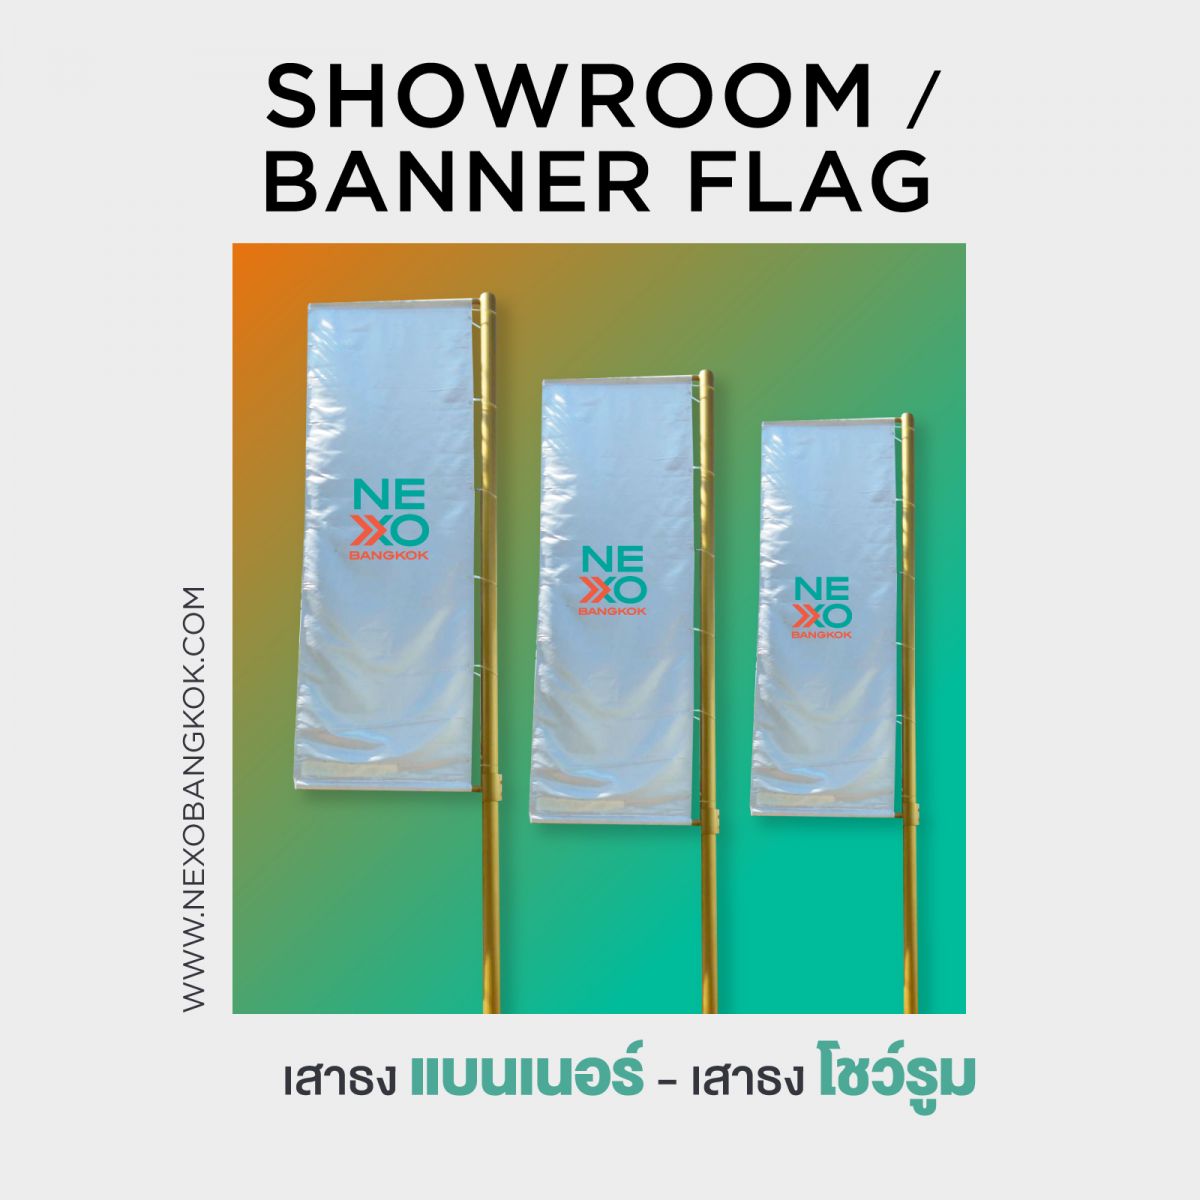 SHOW ROOM FLAG / BANNER FLAG